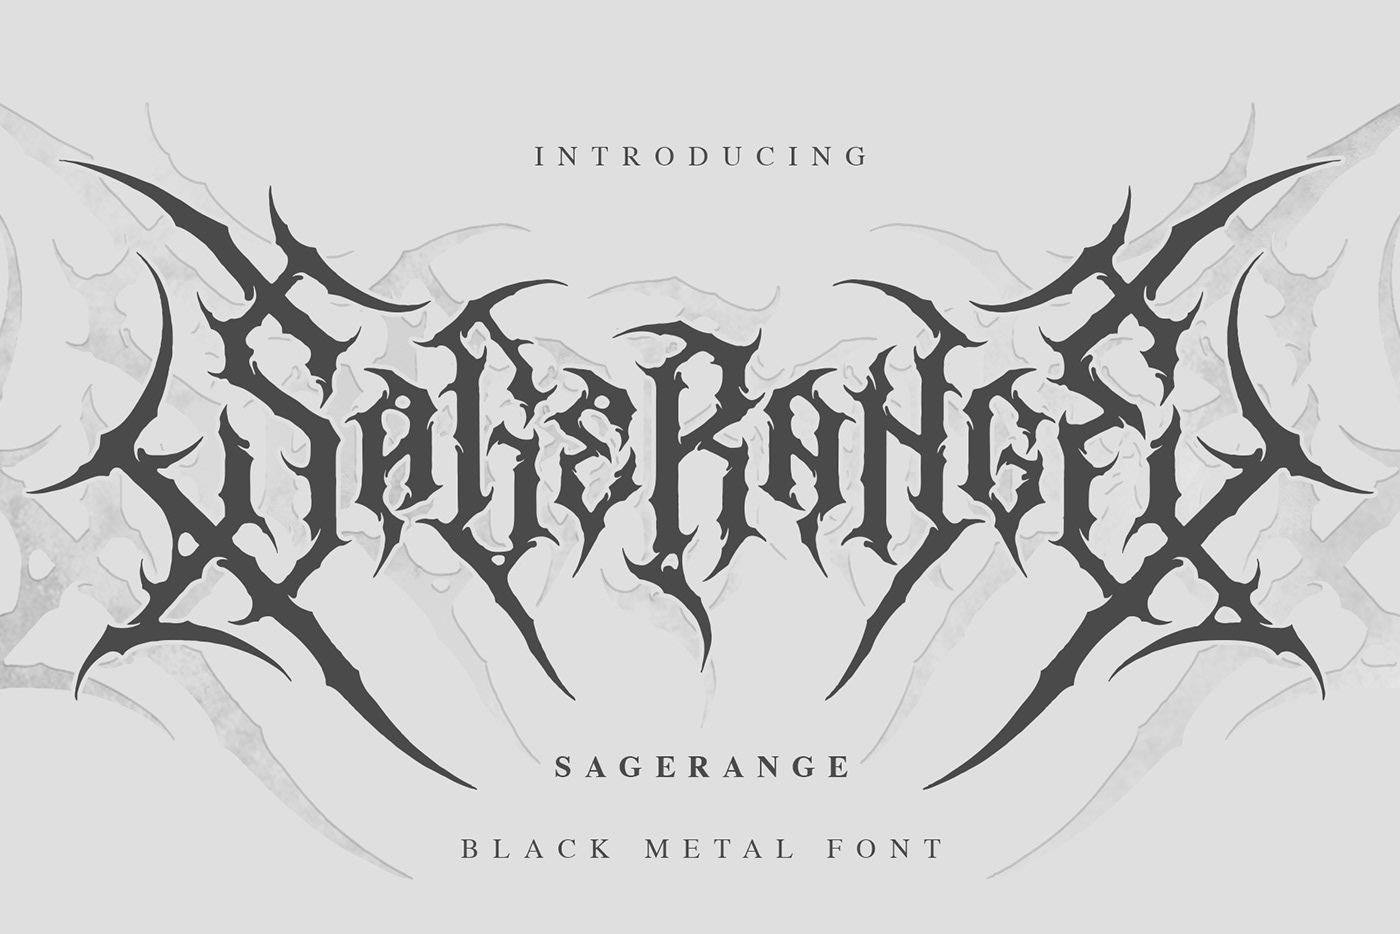 black metal death metal Deathmetal death core  deathcore black metal font death metal font Blackmetal Blackmetal Font deathmetal font